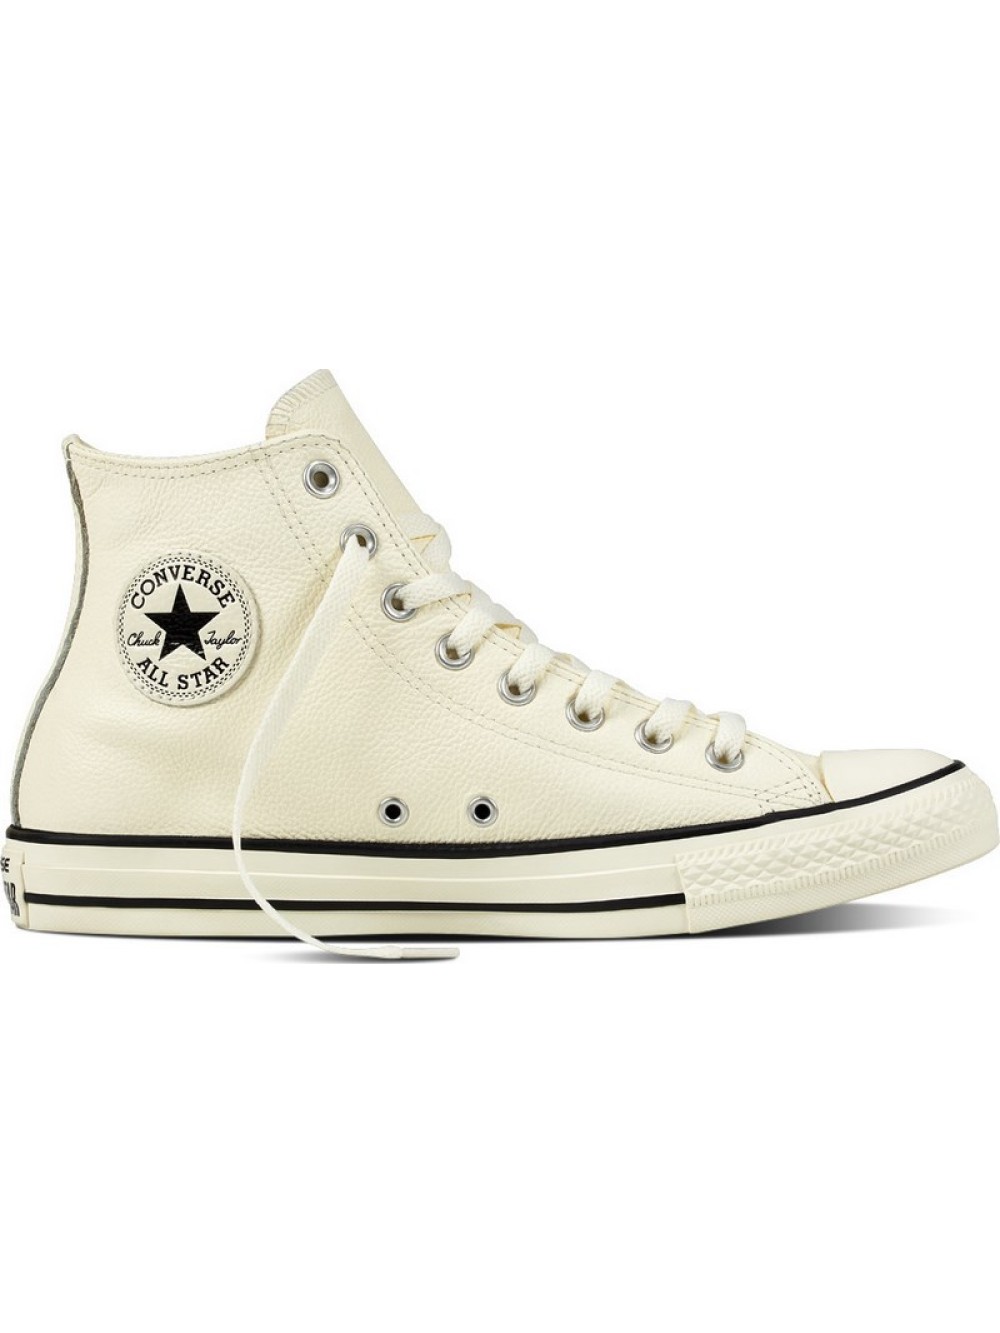 Converse Chuck Taylor All Star Utcai cipő